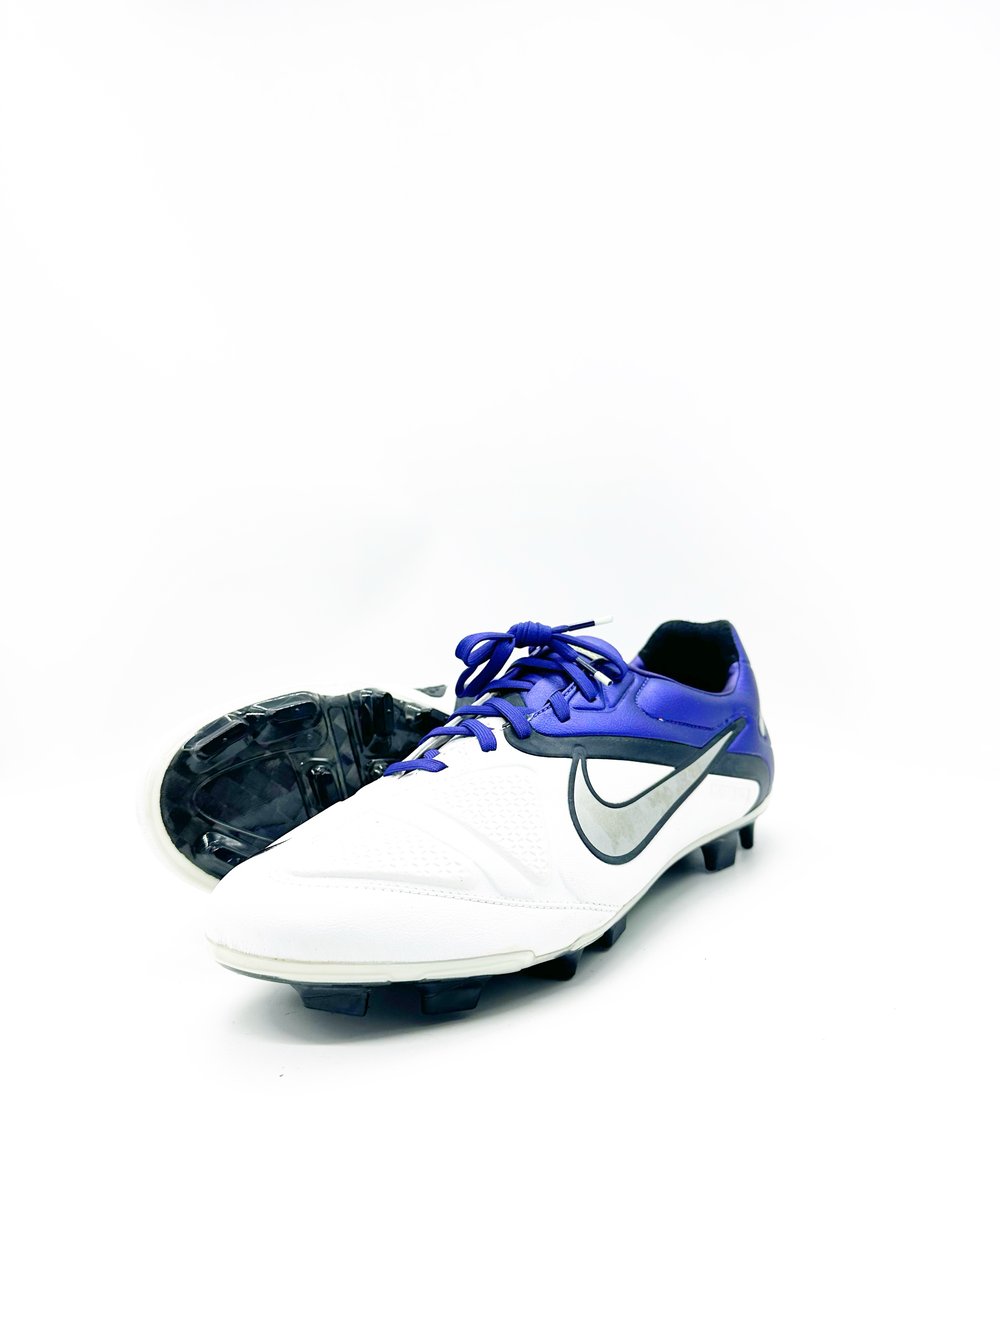 Image of Nike Ctr360 Maesti Elite FG 